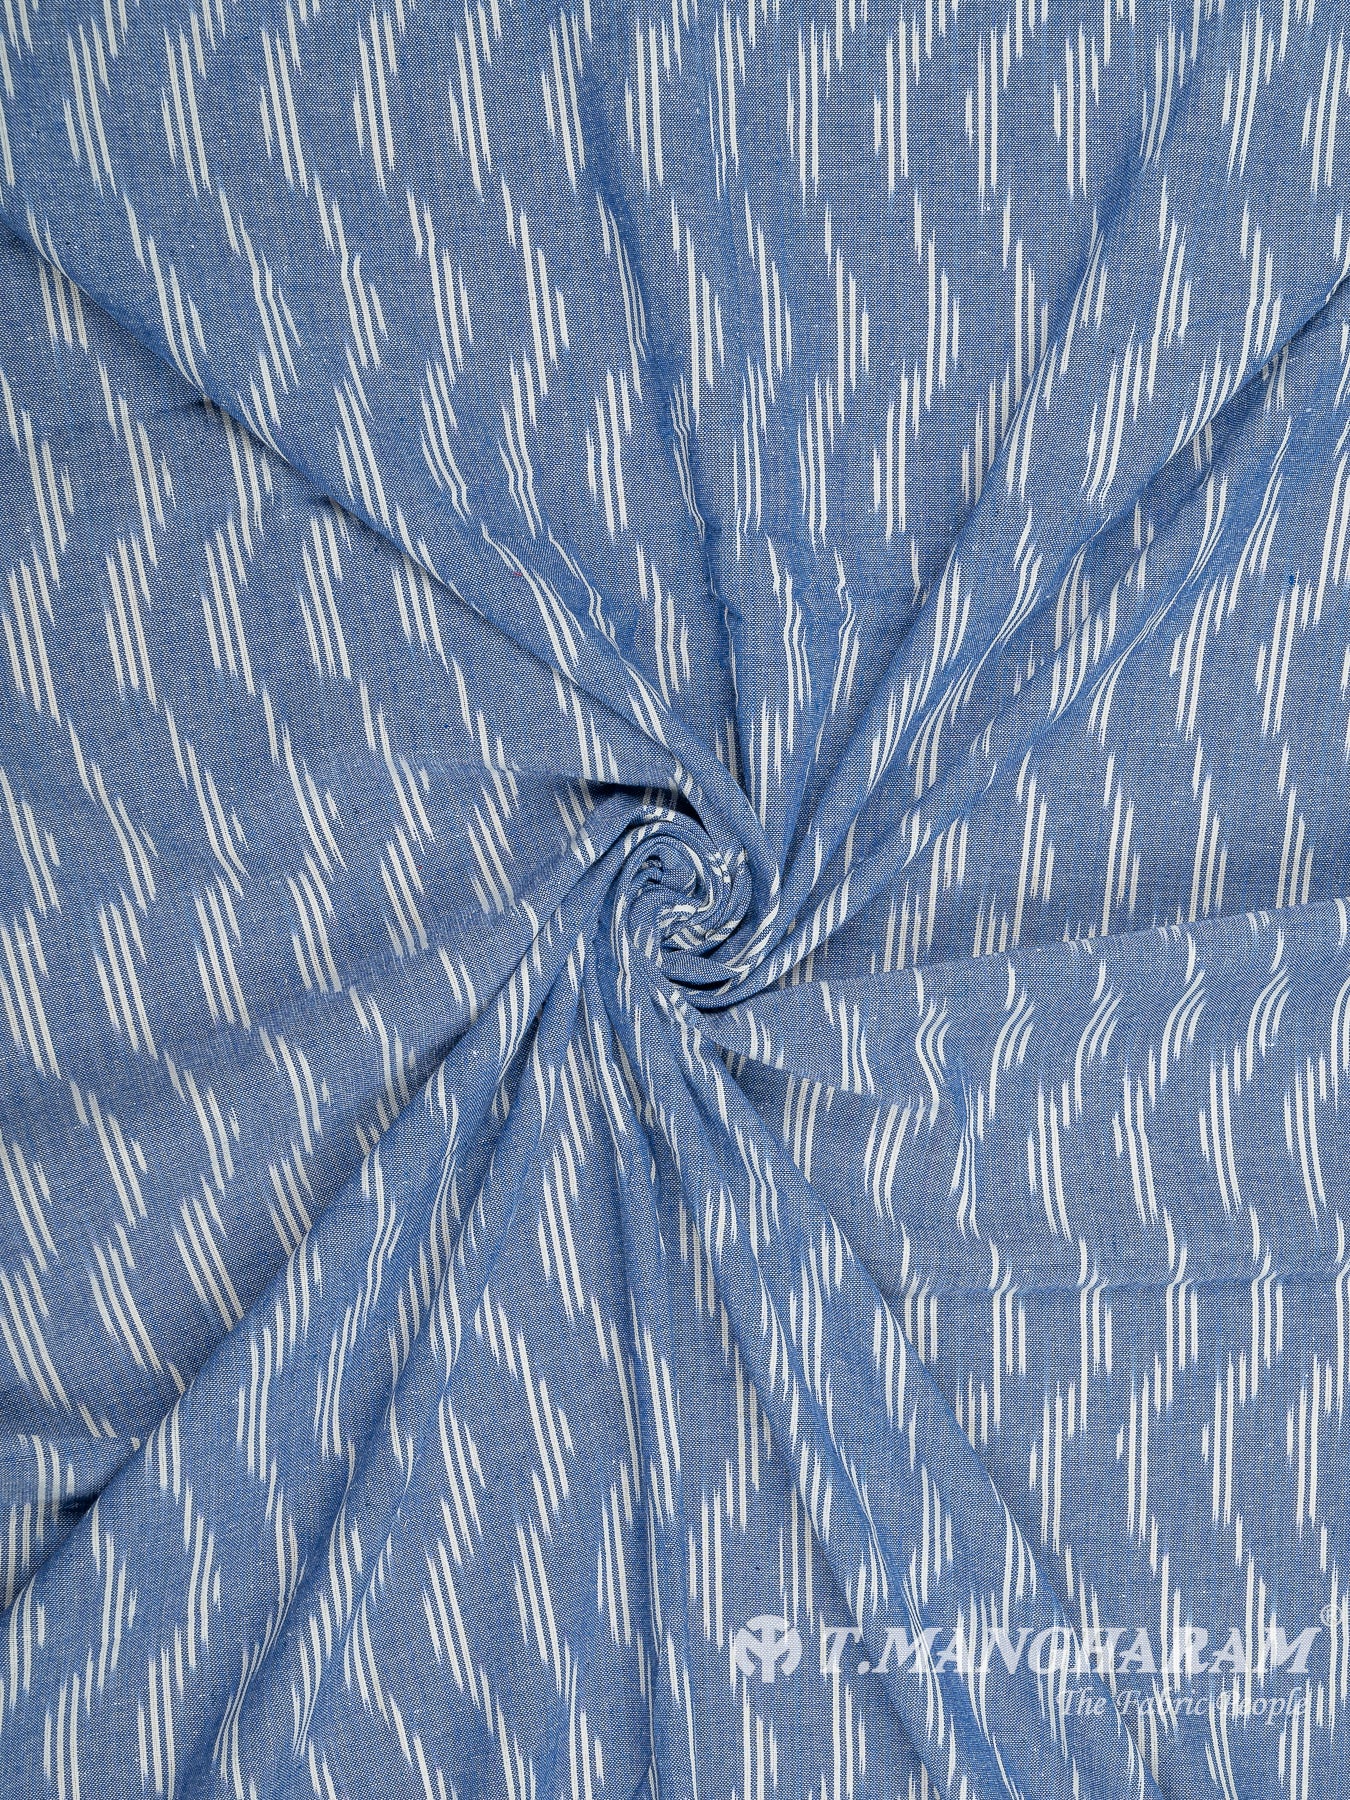 Blue Cotton Ikat Print Fabric - EB5832 view-1